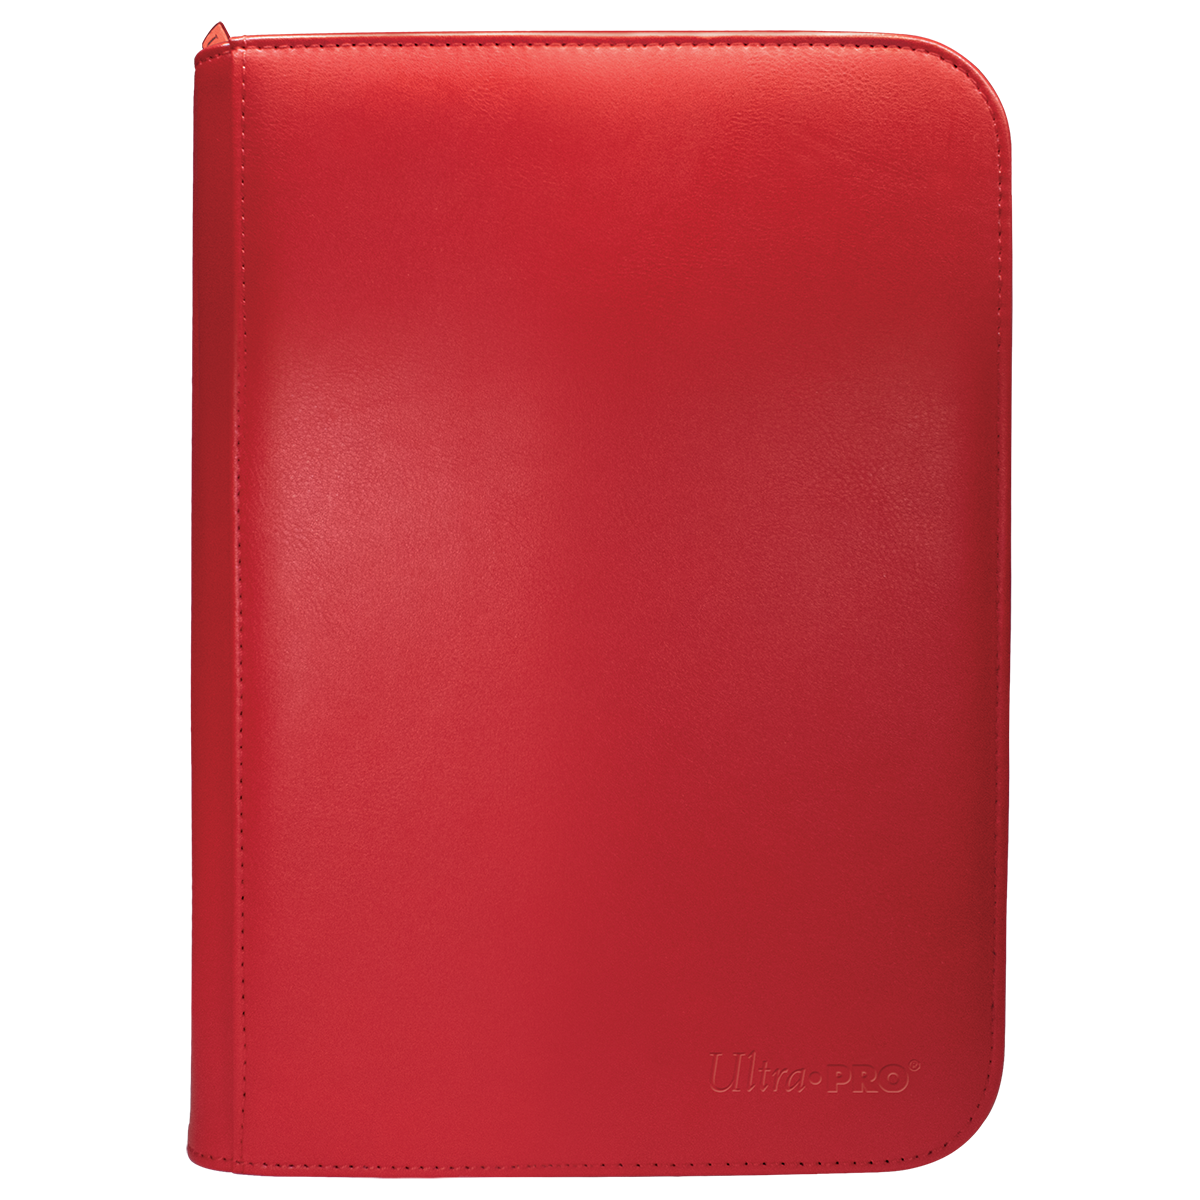 Ultra Pro Vivid 4-Pocket Zippered PRO-Binder - Red